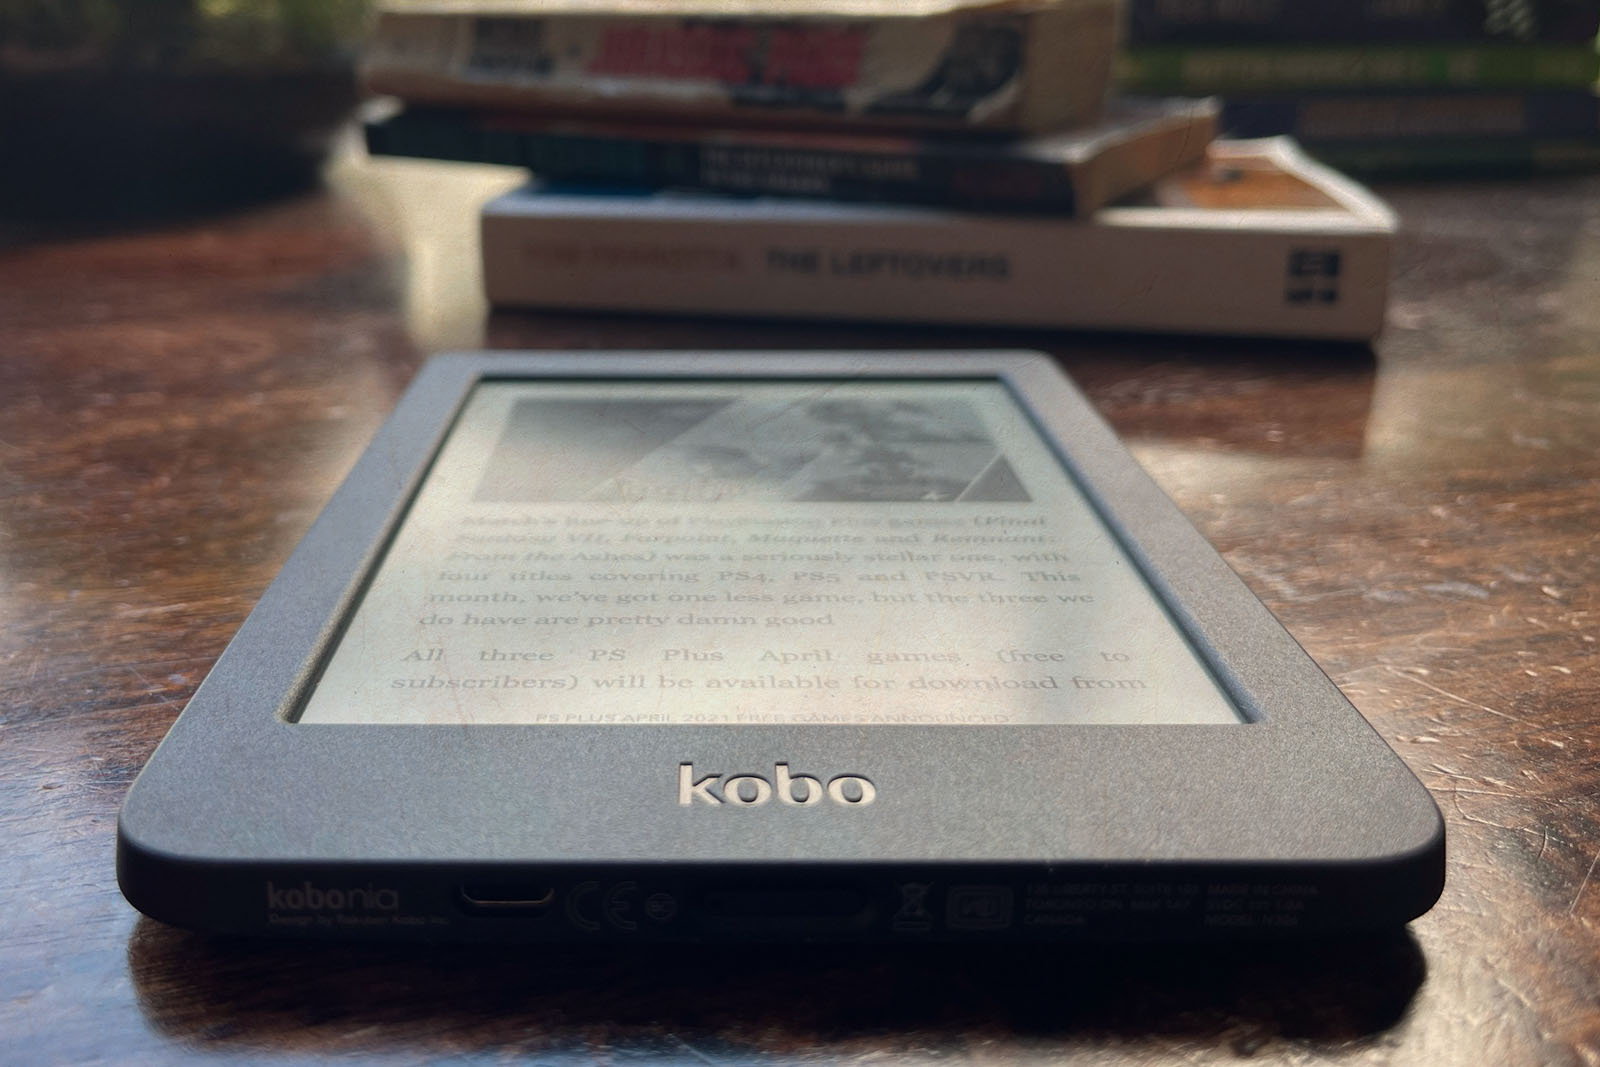 Kobo Nia Review: A Decent Kindle Alternative